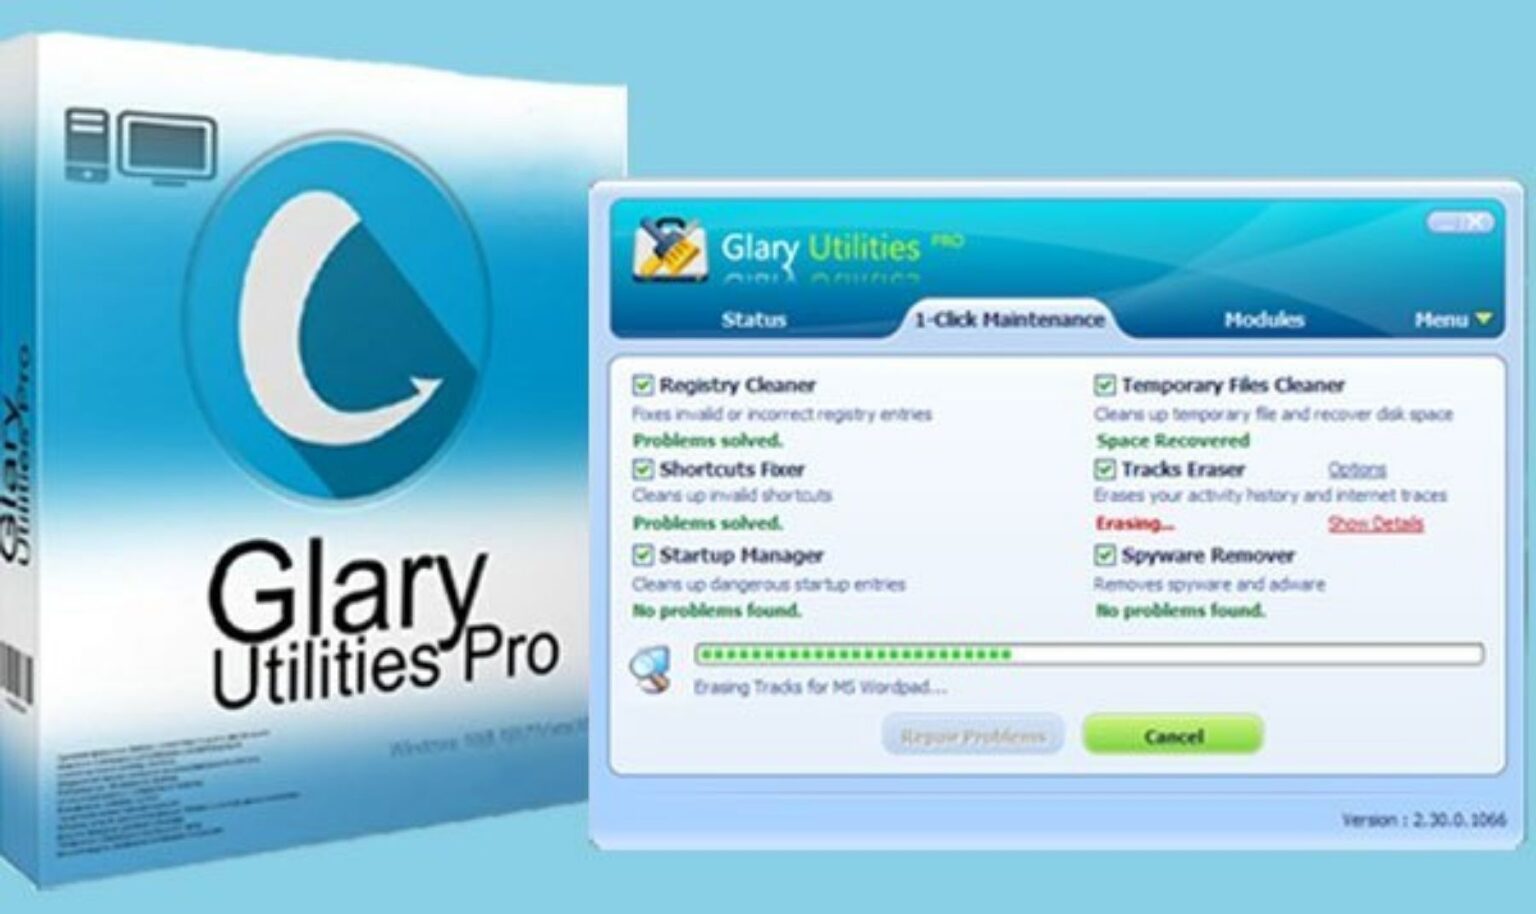 glary utilities pro vs free